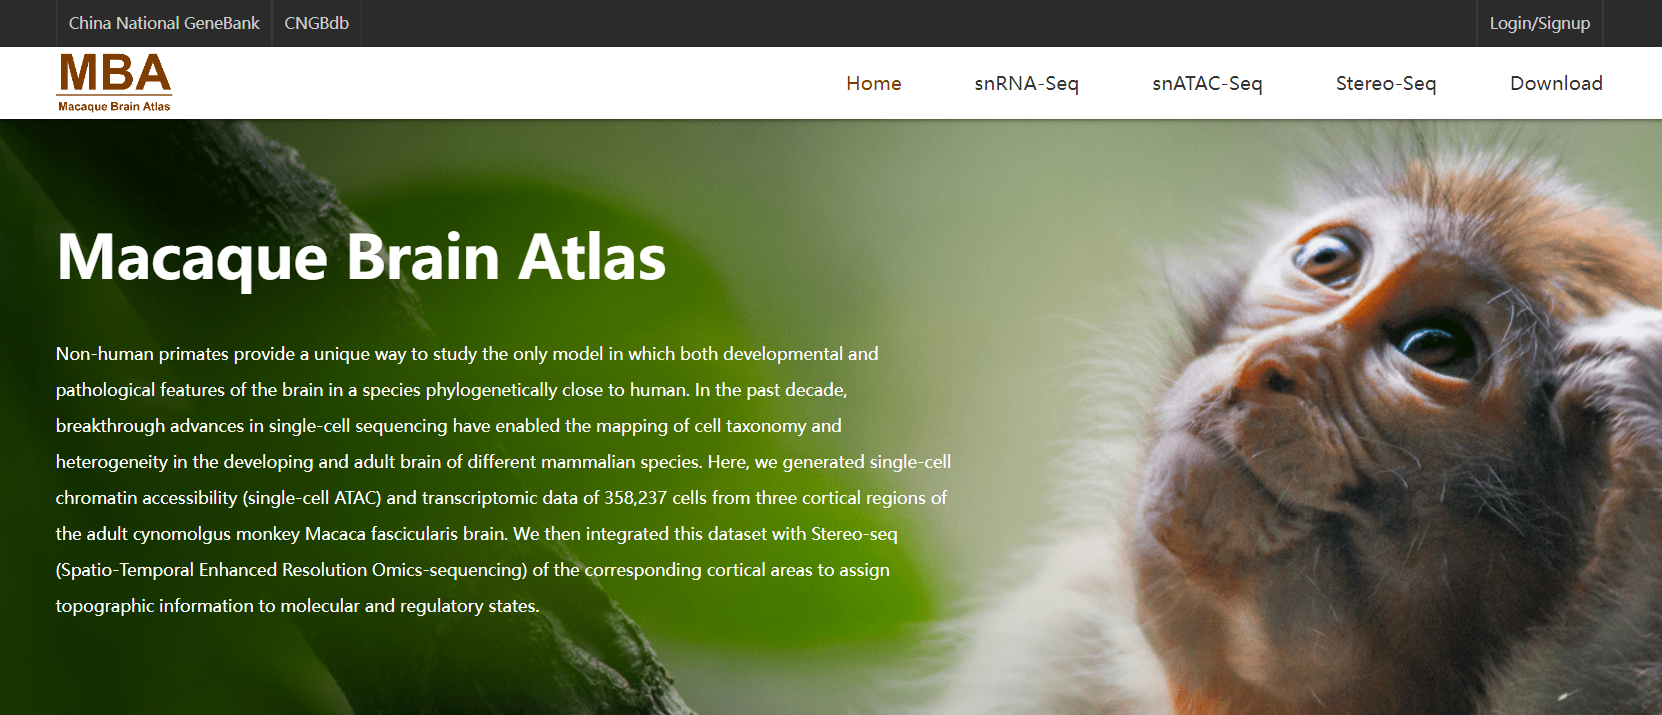 MBA: Macaque brain atlas